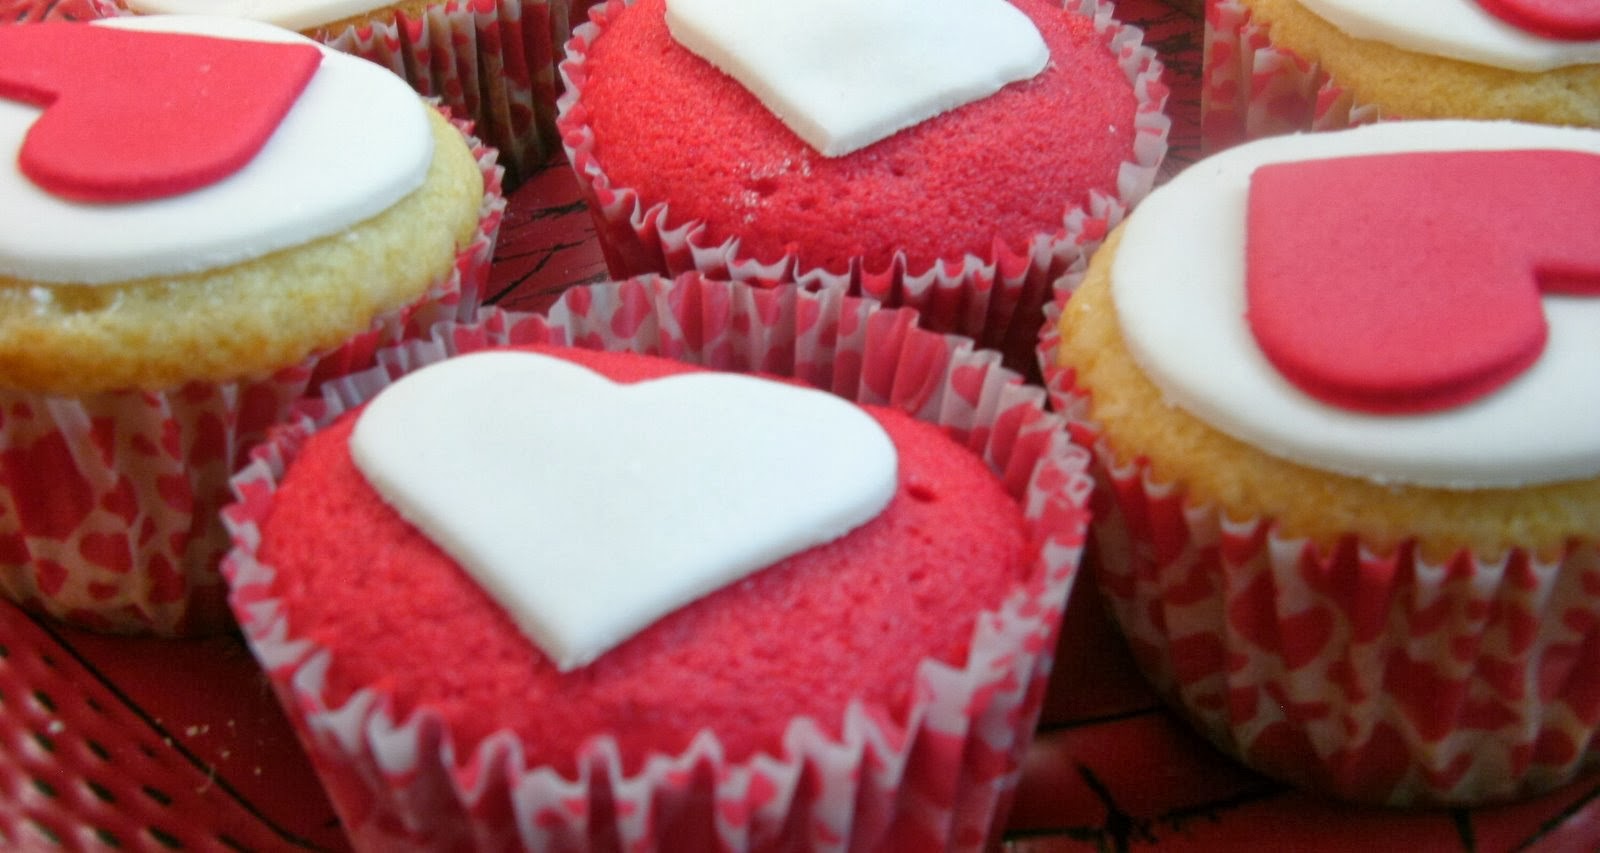 Cupcakes San Valentin, parte 2